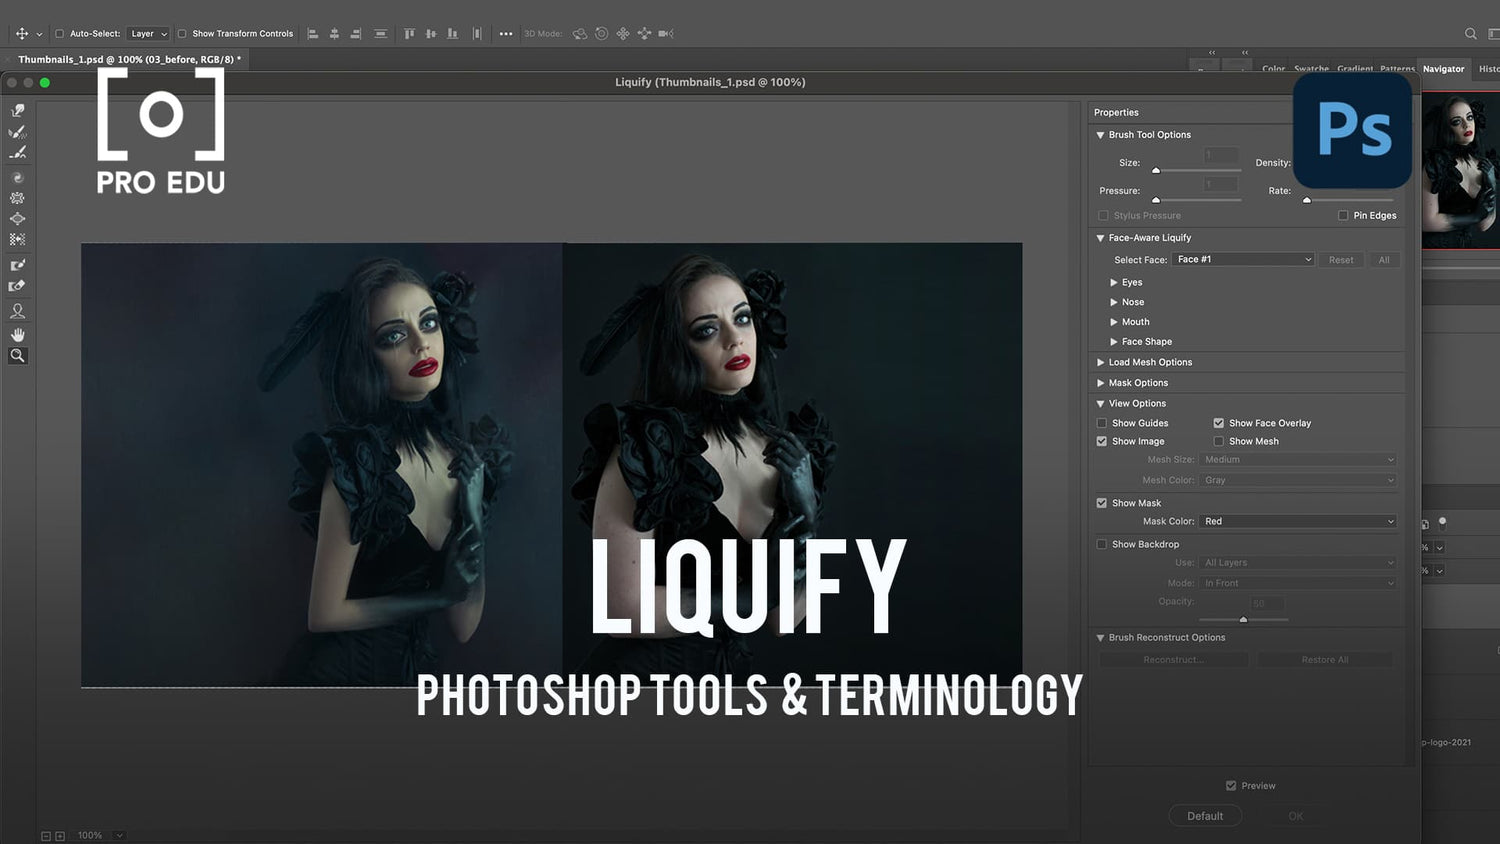 Liquify Tool in Photoshop - PRO EDU Tutorial